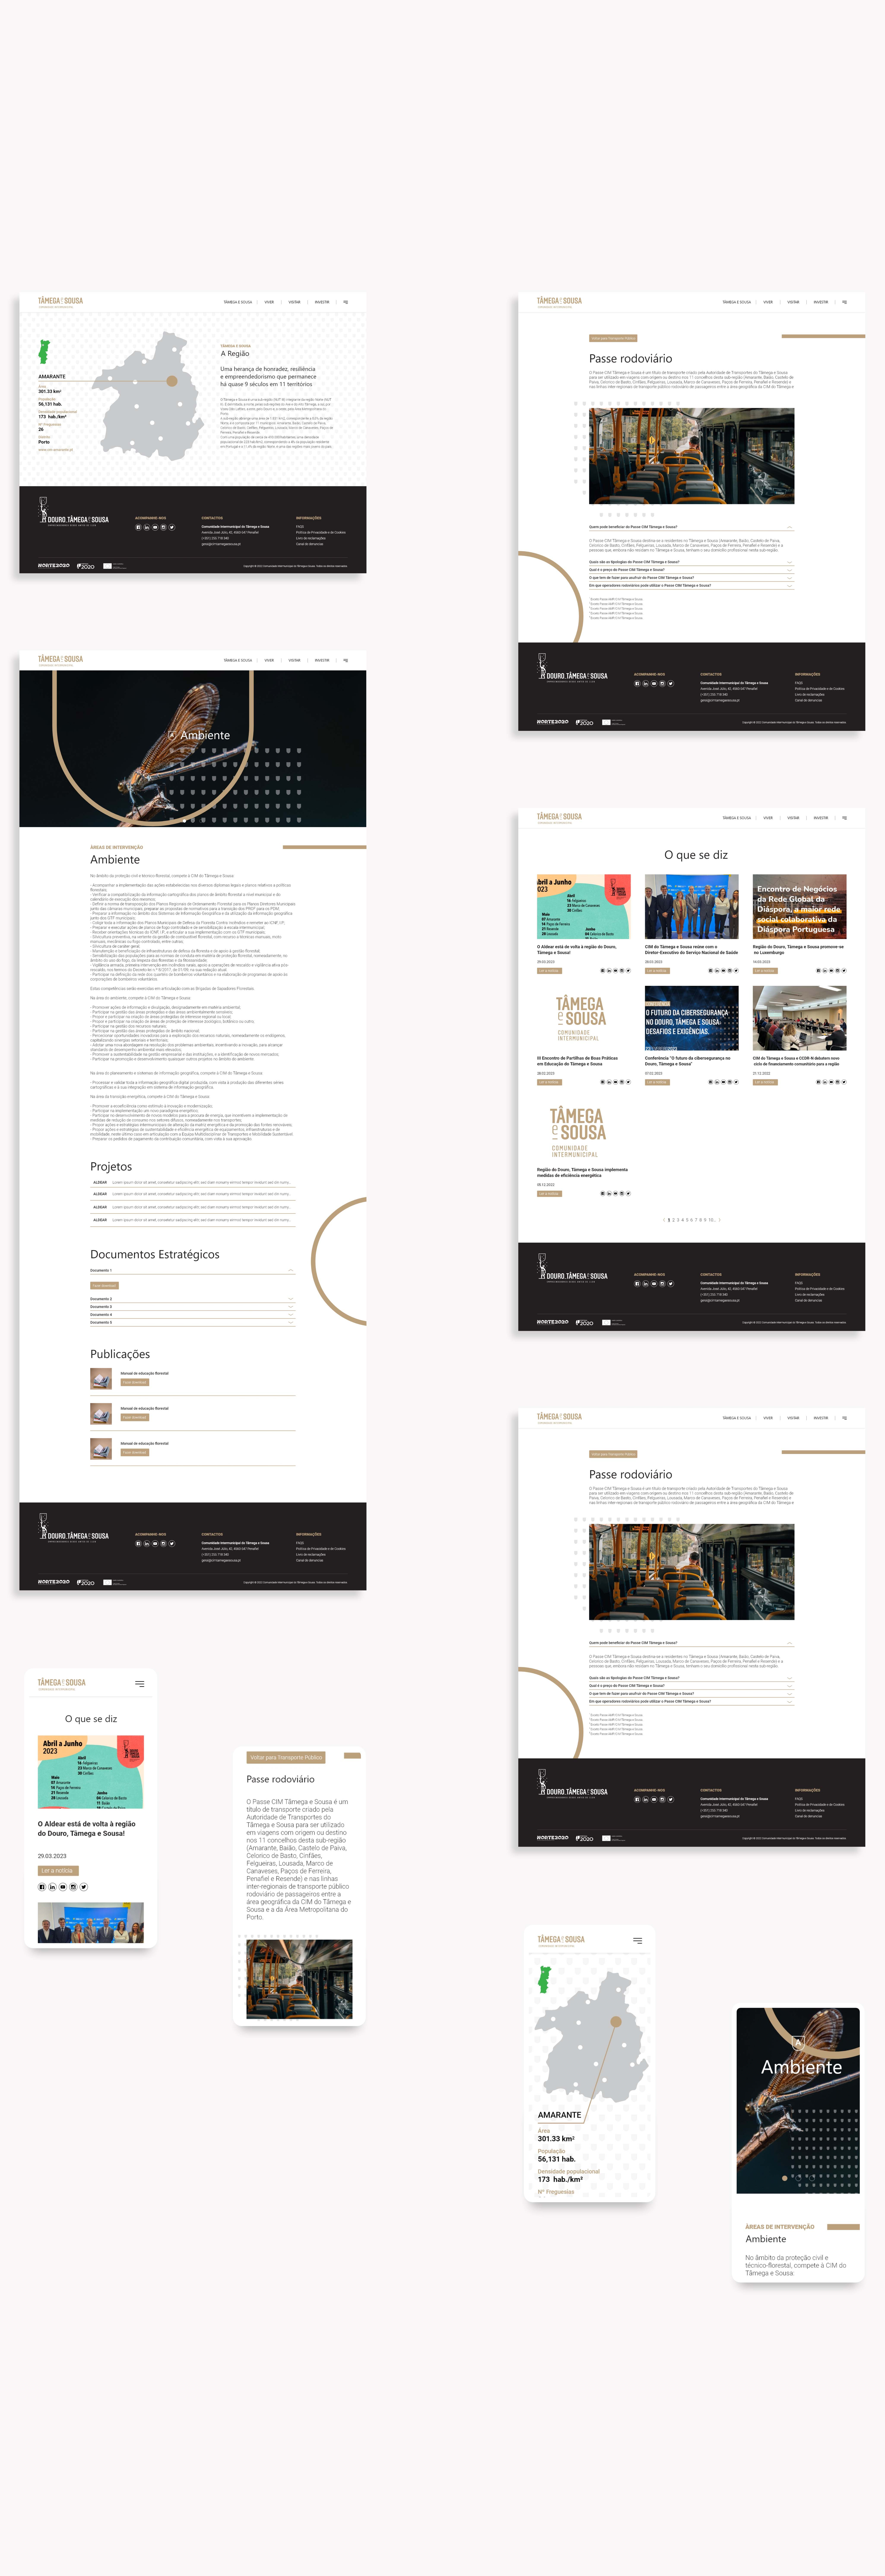 layout developed for CIM Tâmega e Sousa website